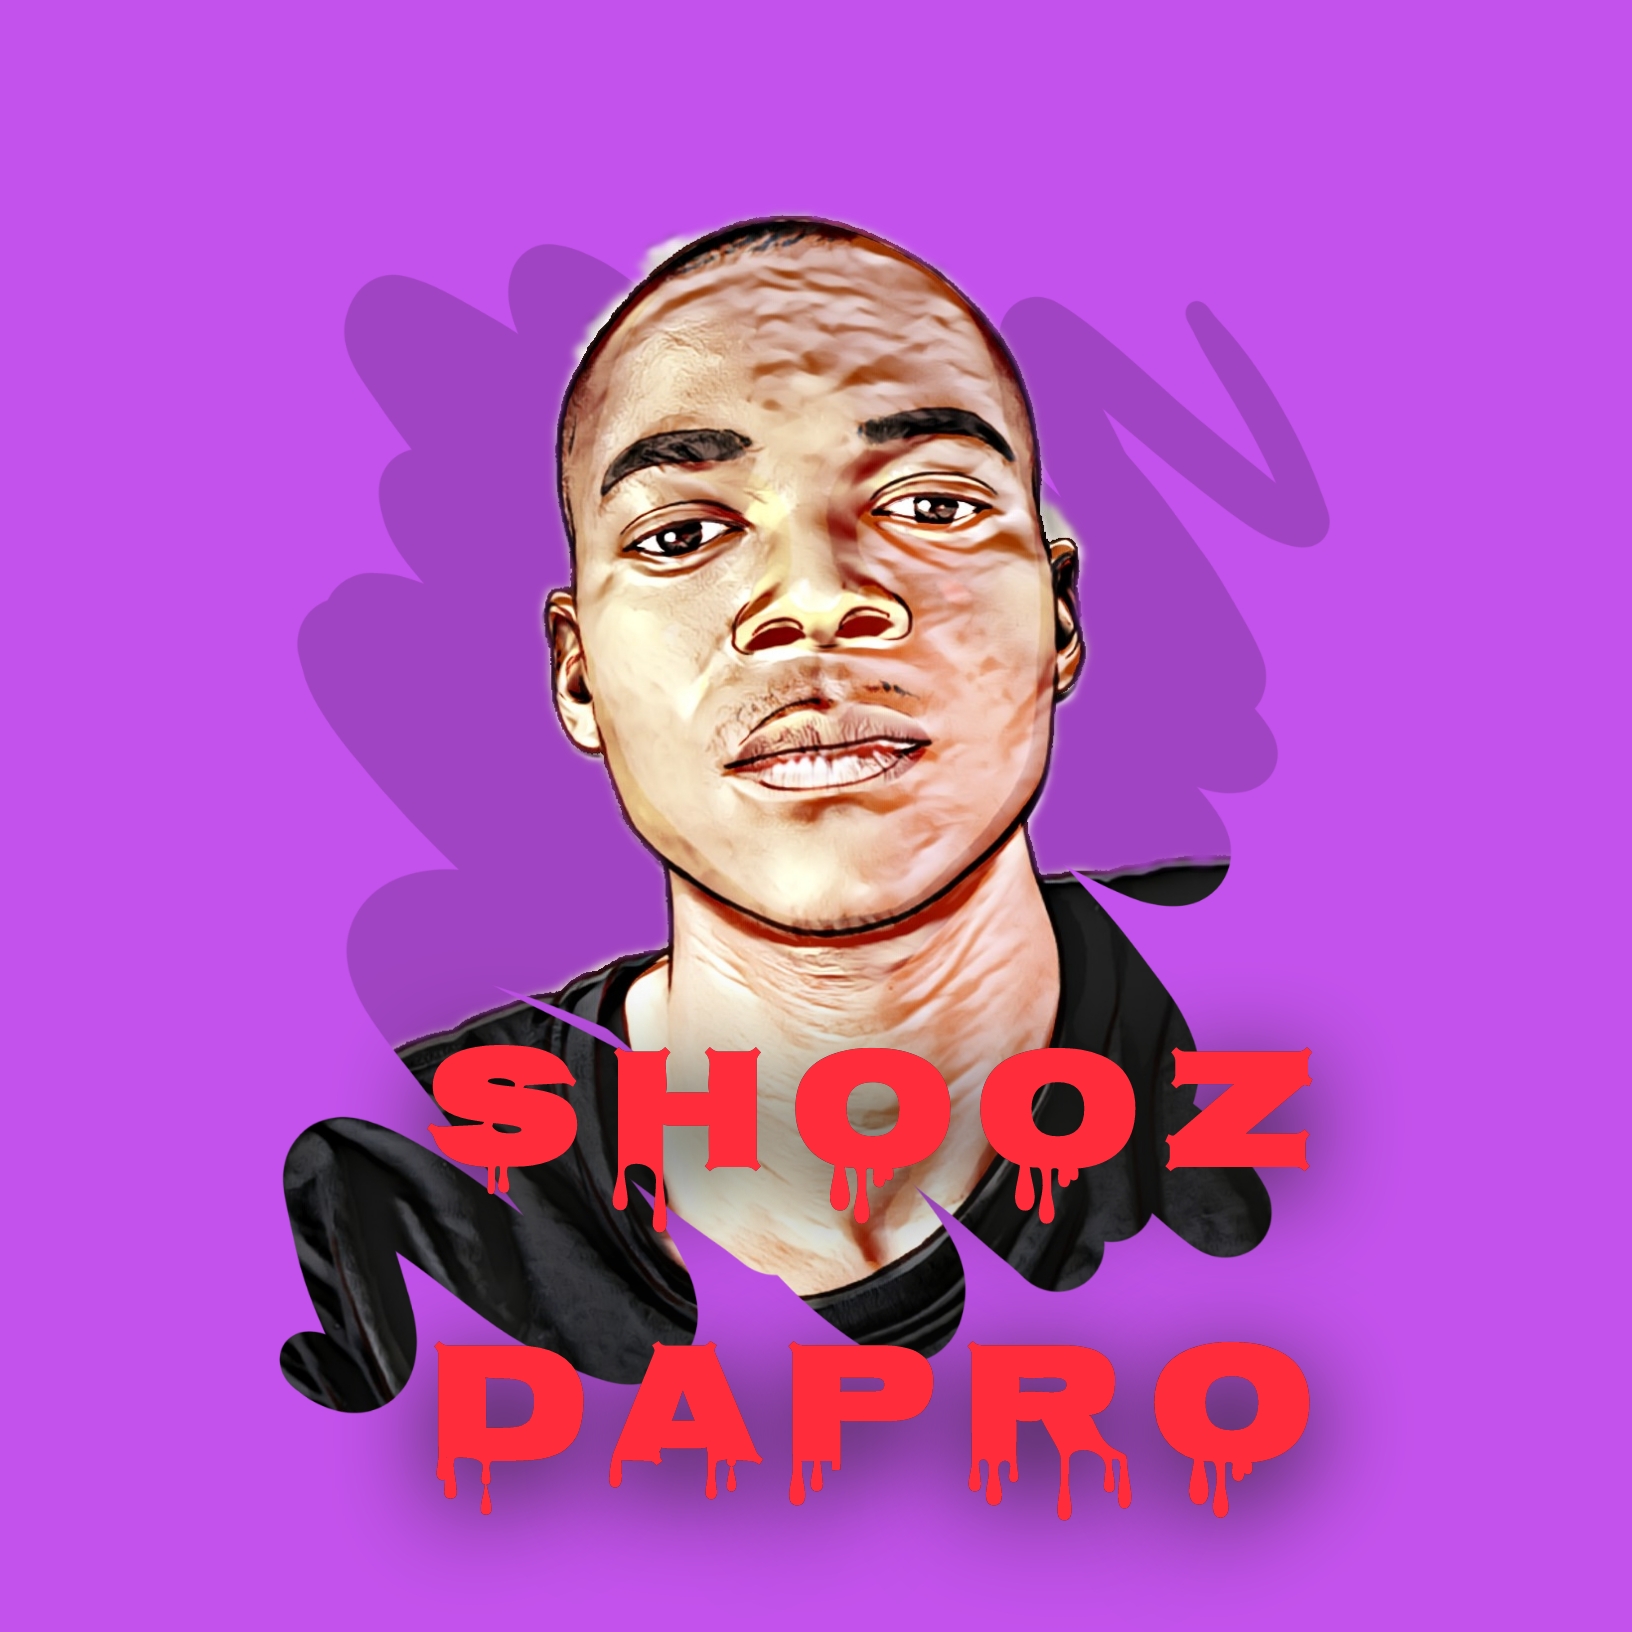 Show Me Love - Shooz DaPro